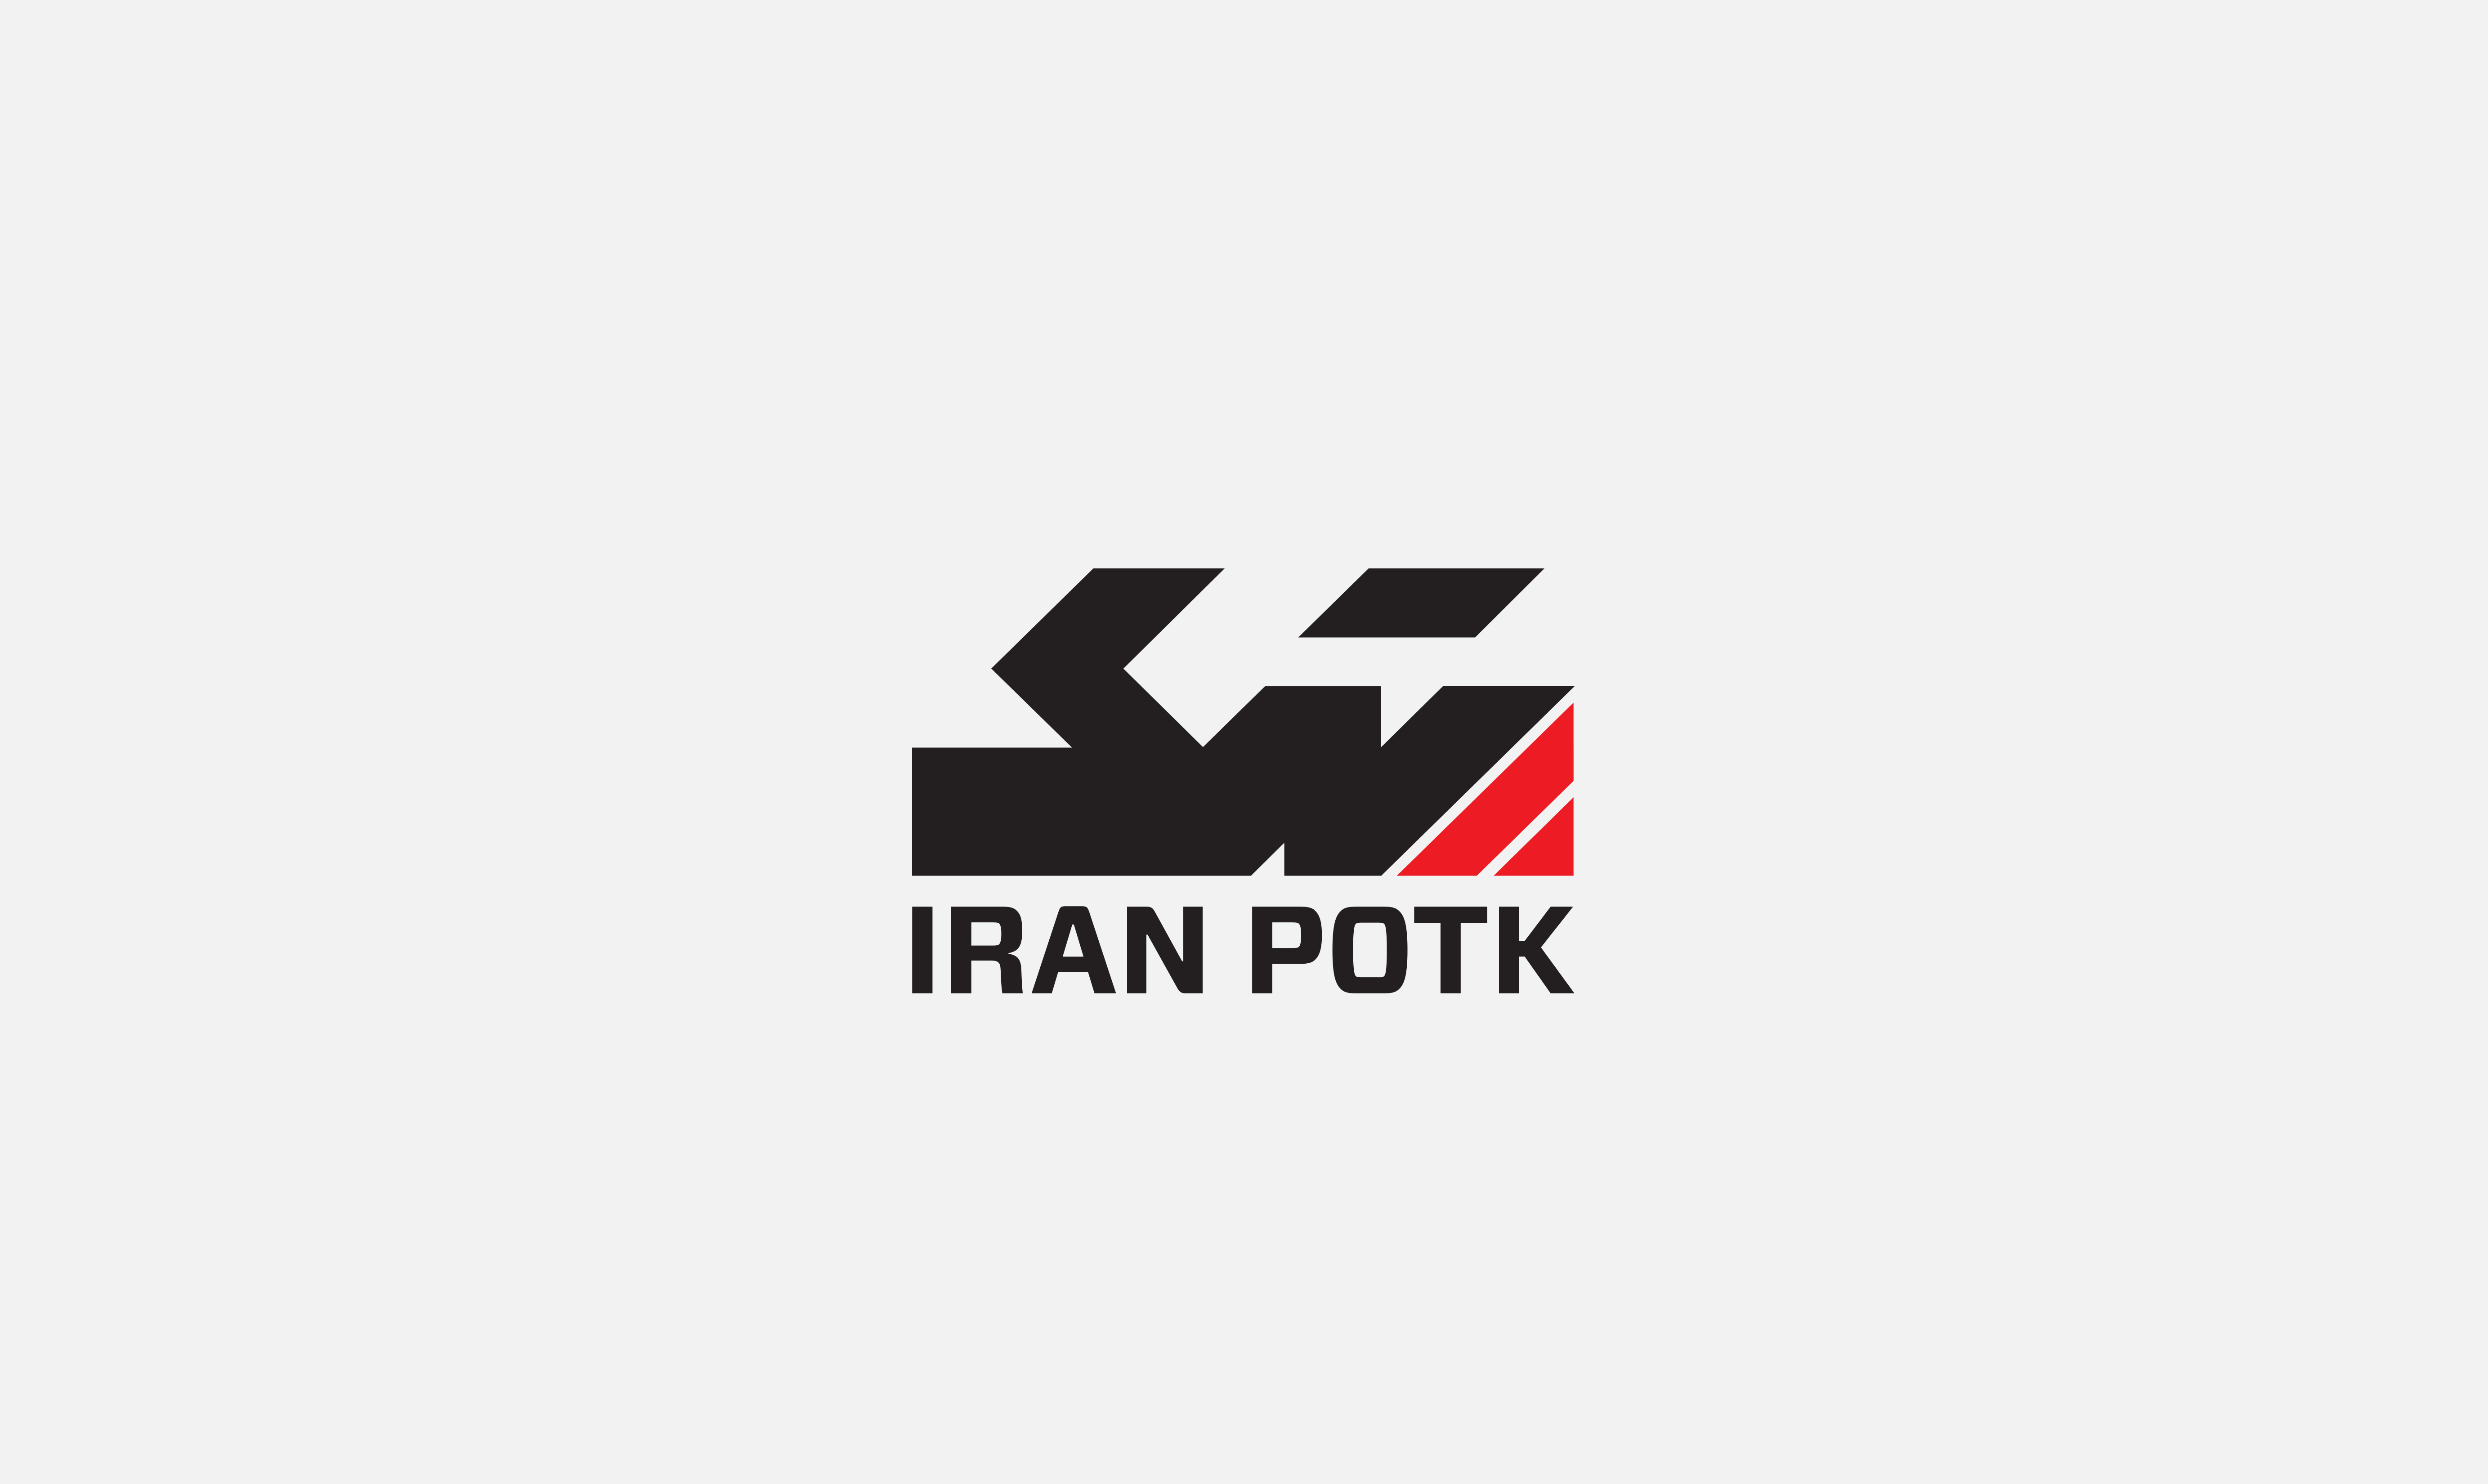 IRAN POTK,ایران پتک